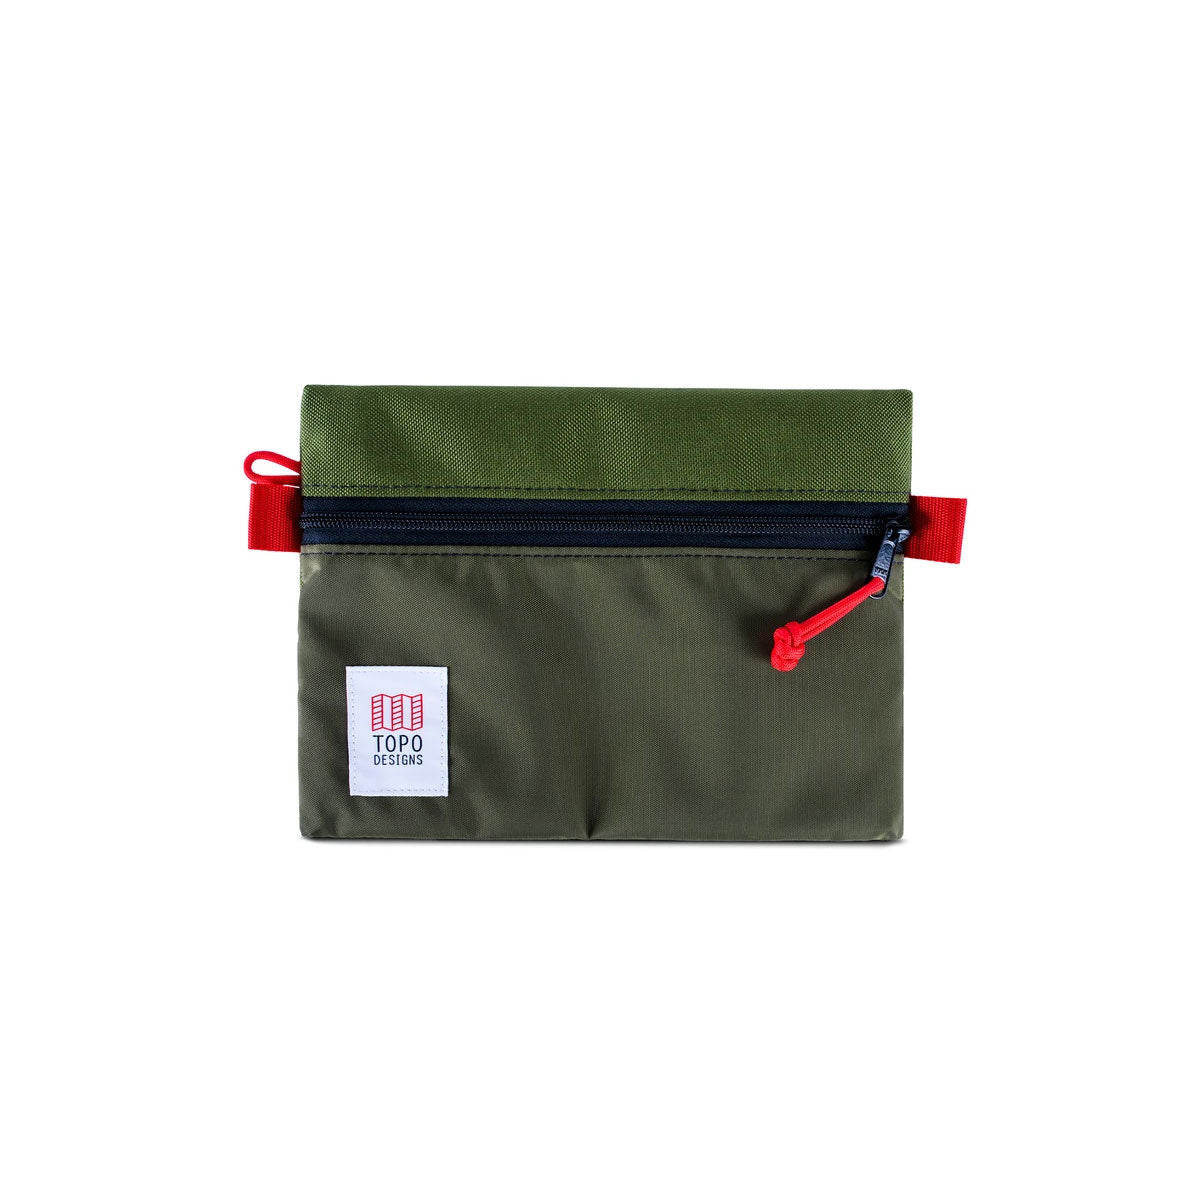 Topo Designs : Accessory Bag : Olive/Olive